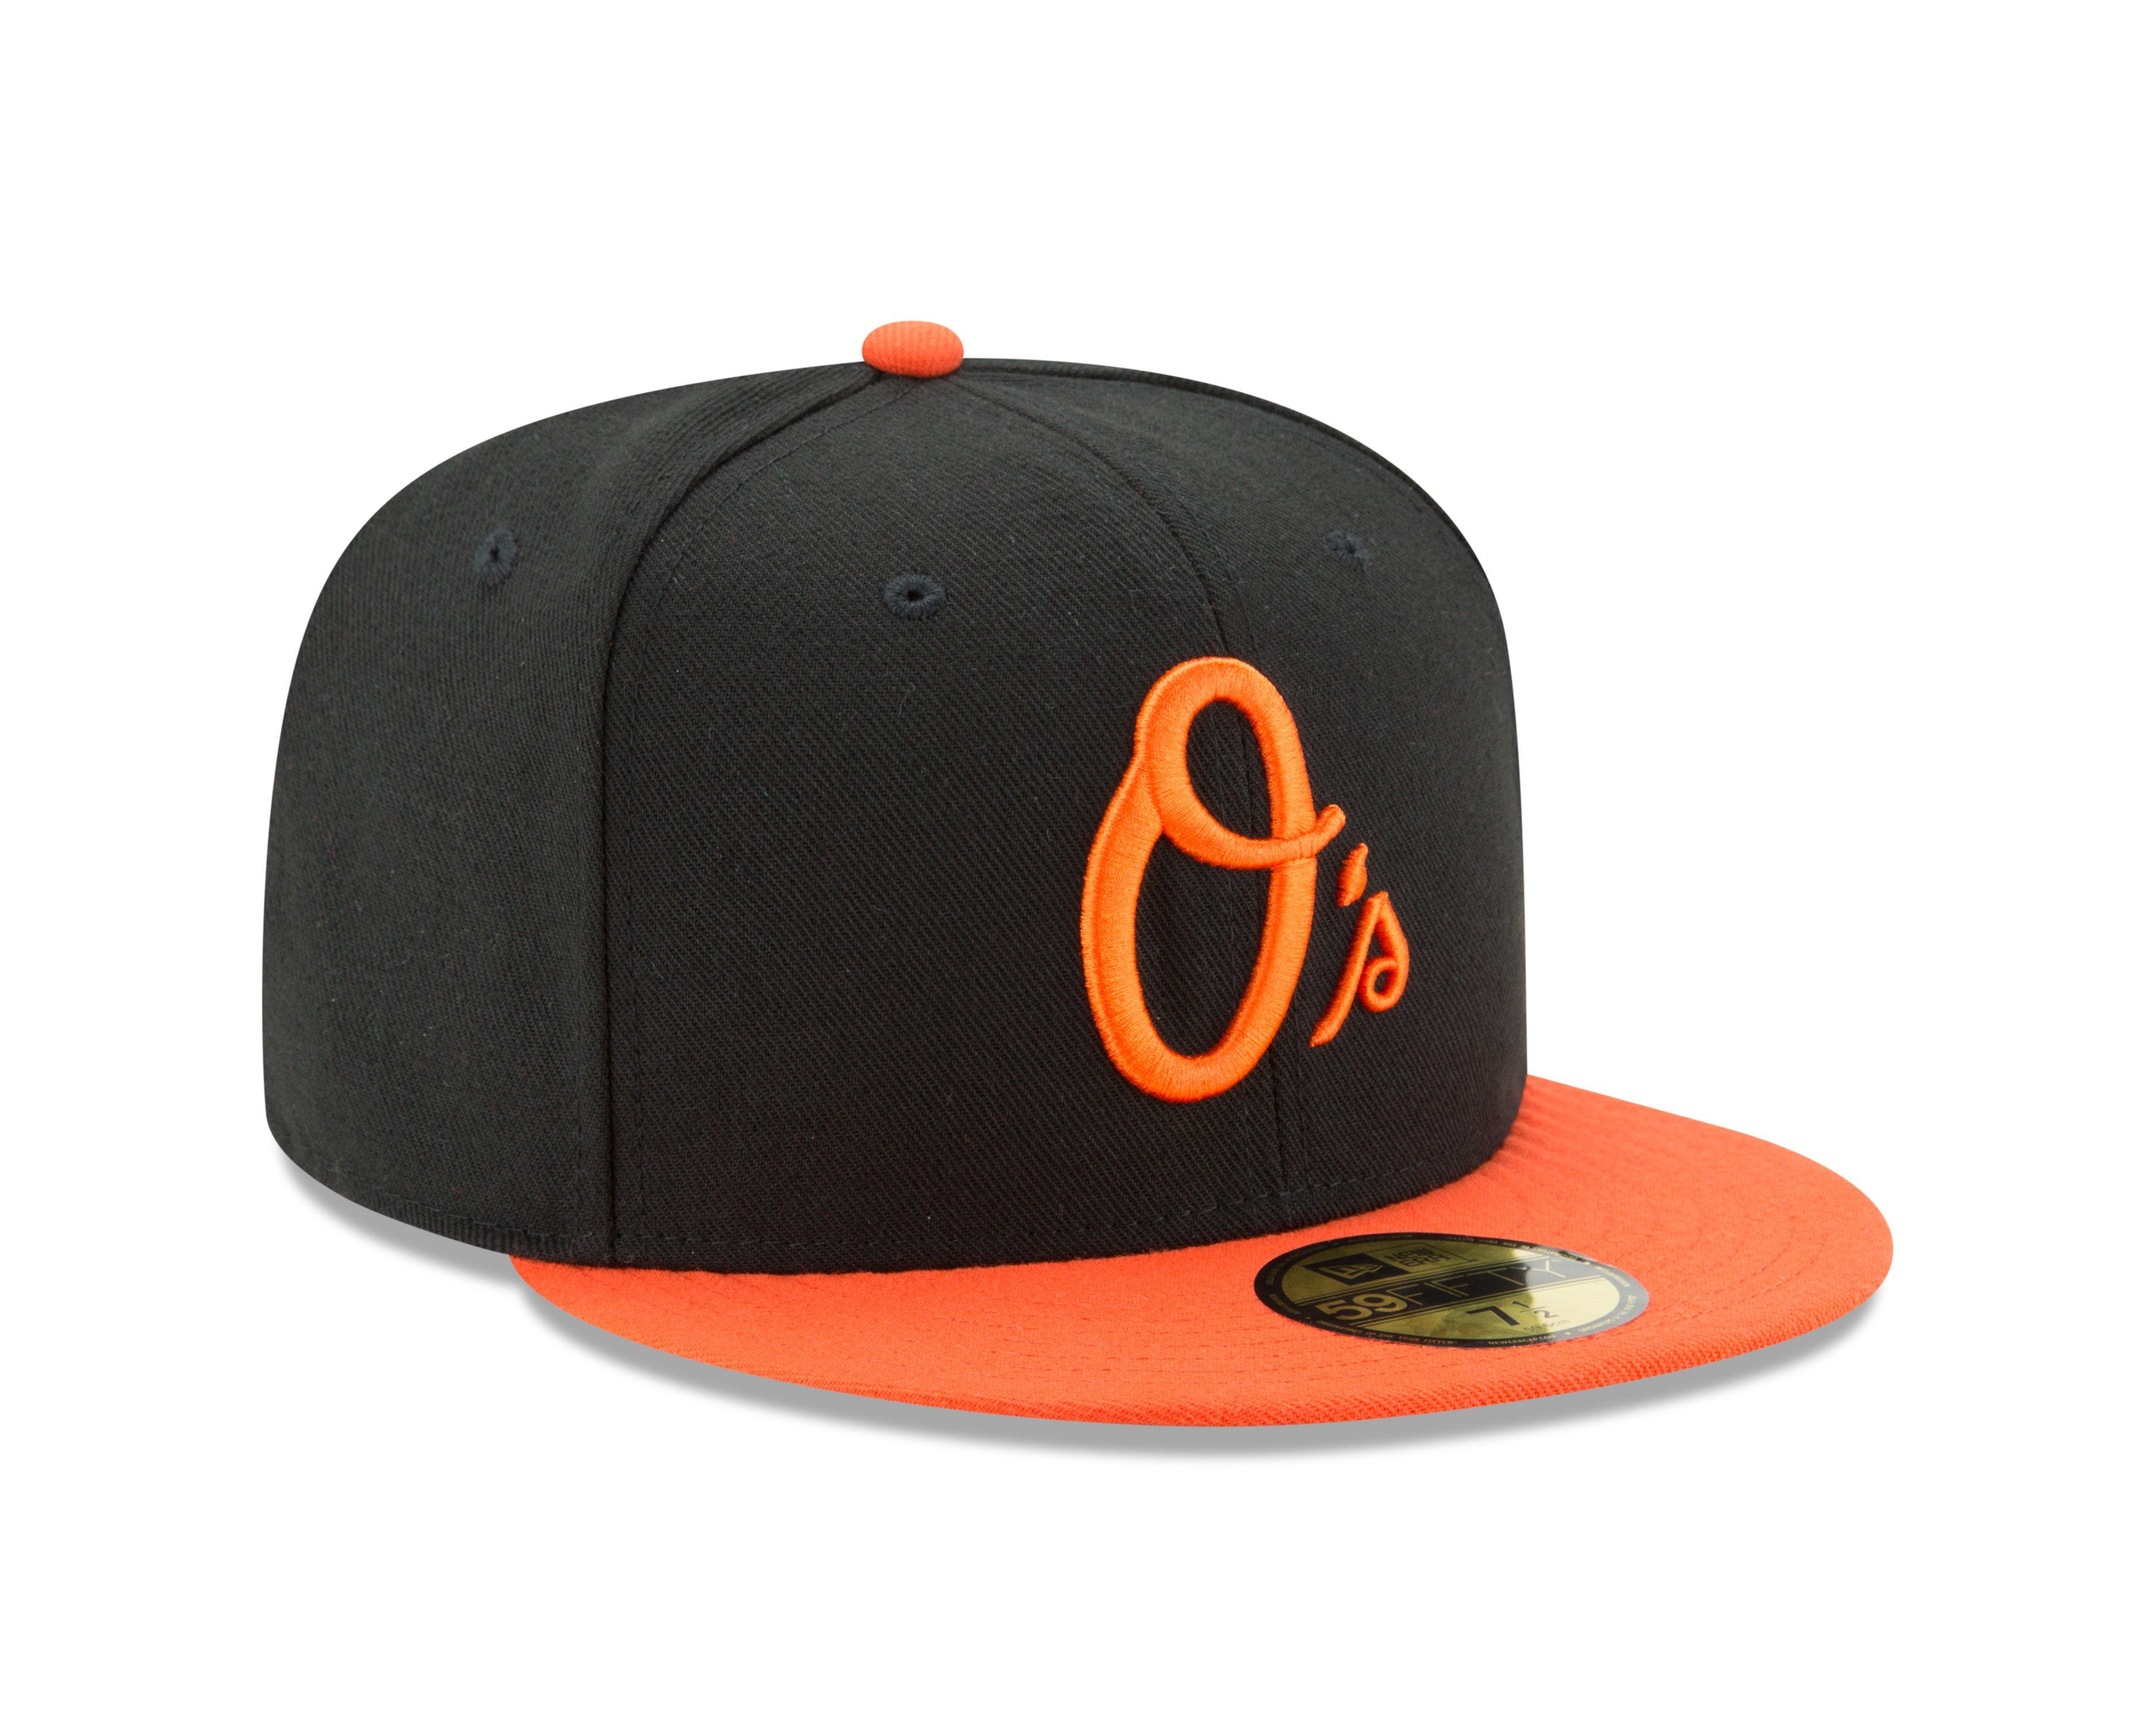 Accessories, 1 Baltimore Orioles Baseball Cap